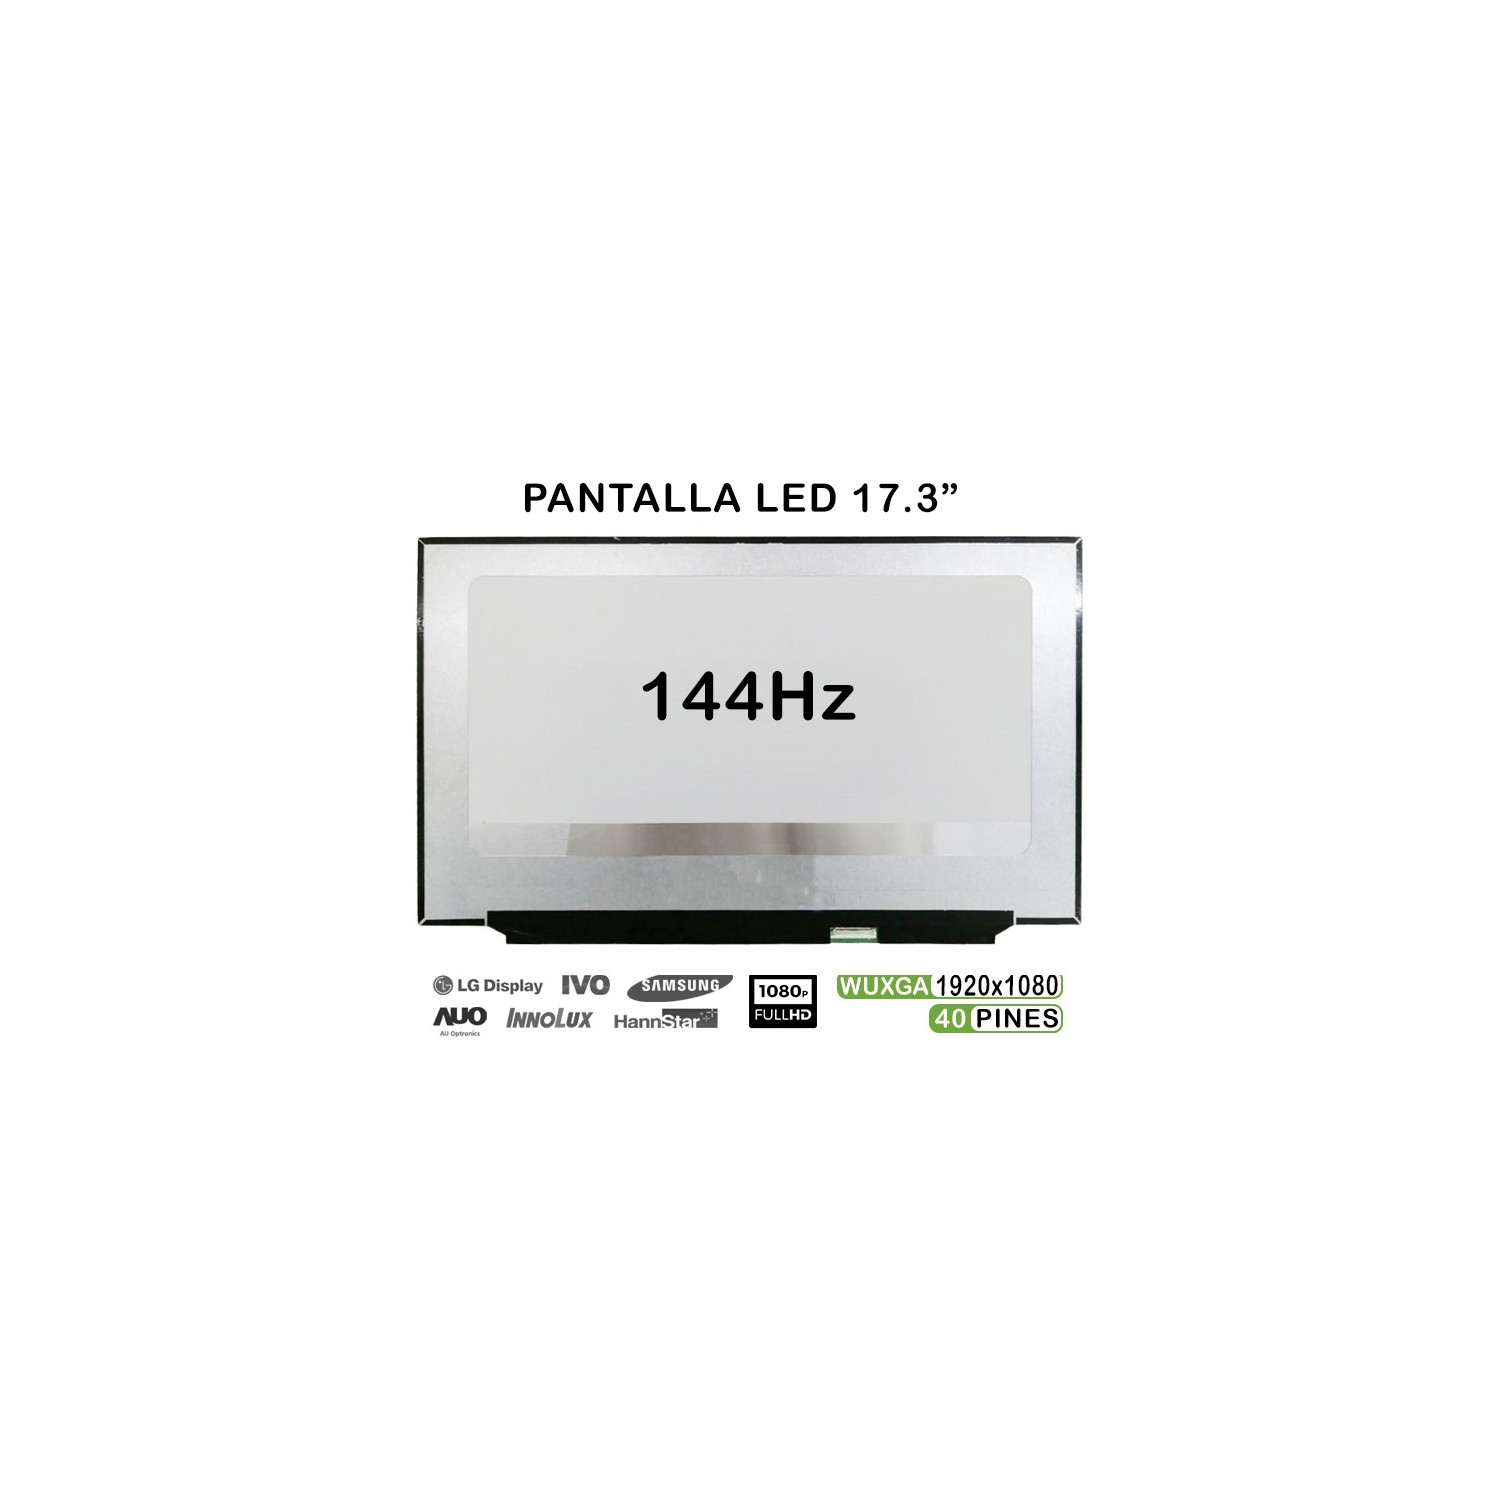 PANTALLA LED DE 17.3" PARA PORTÁTIL B173HAN04.4 144HZ FHD 40 PINES